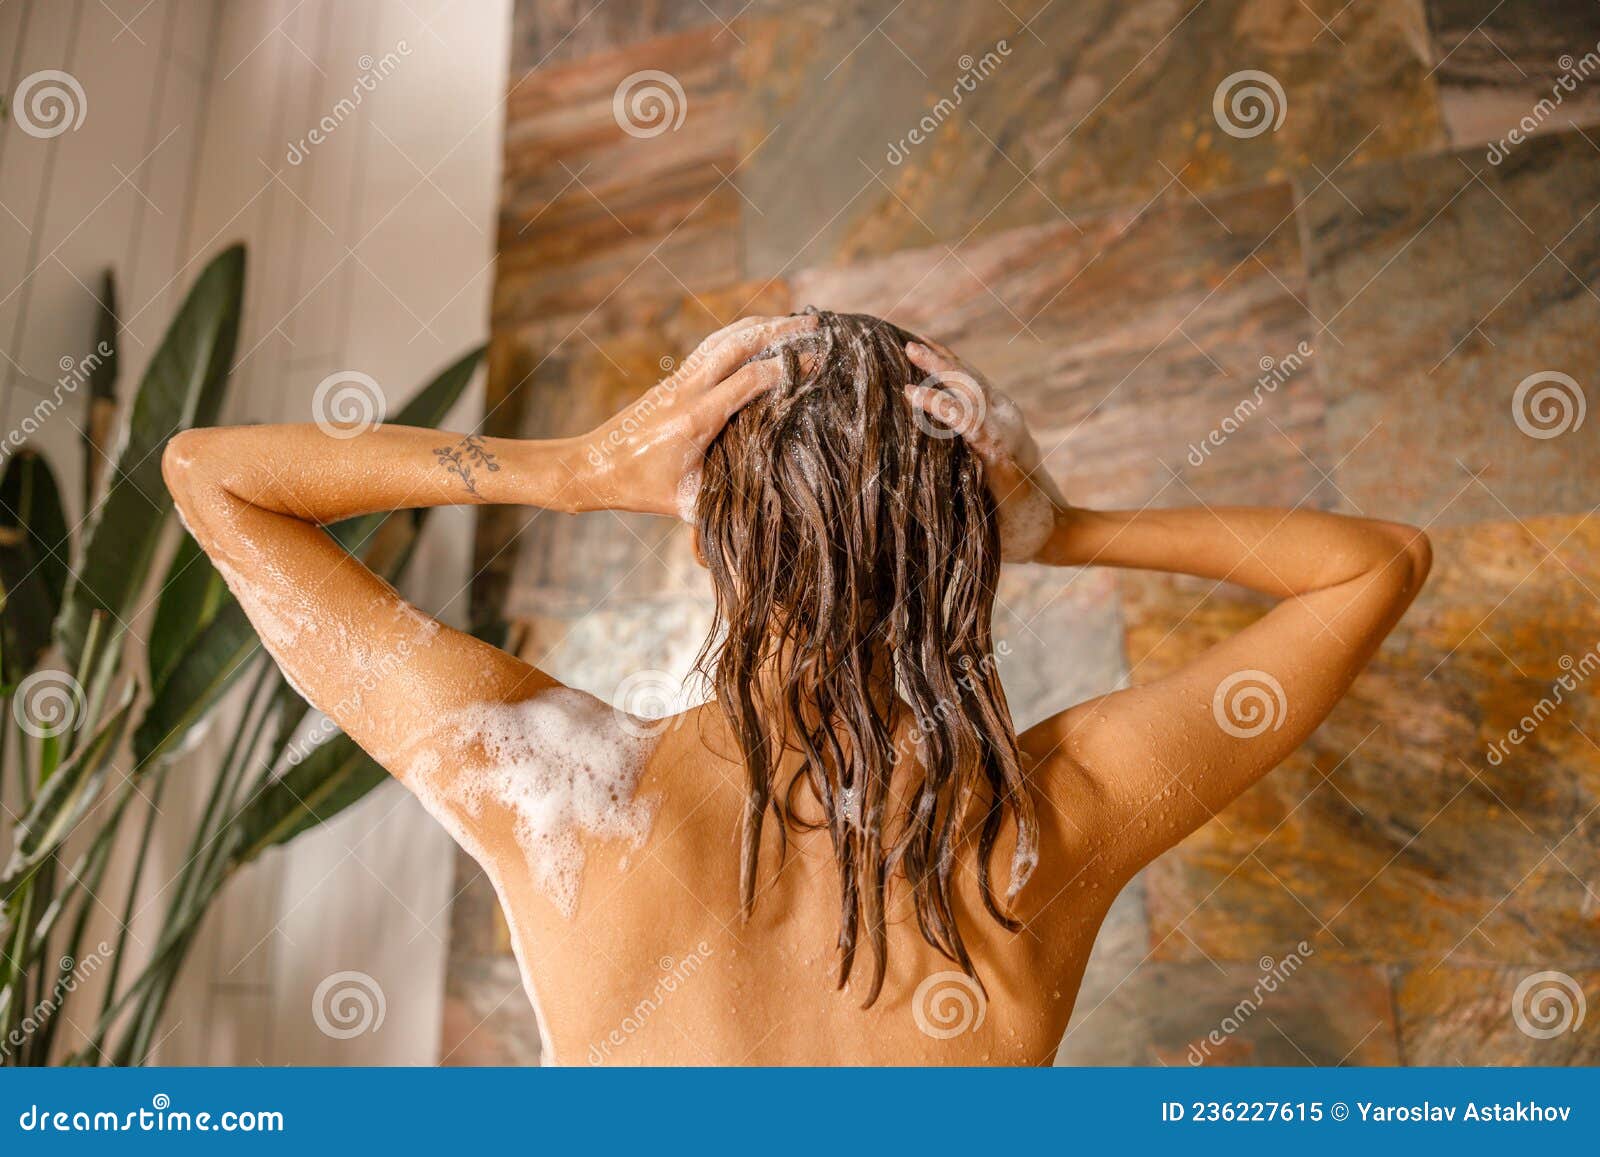 Naked Woman Taking A Bath sons teacher